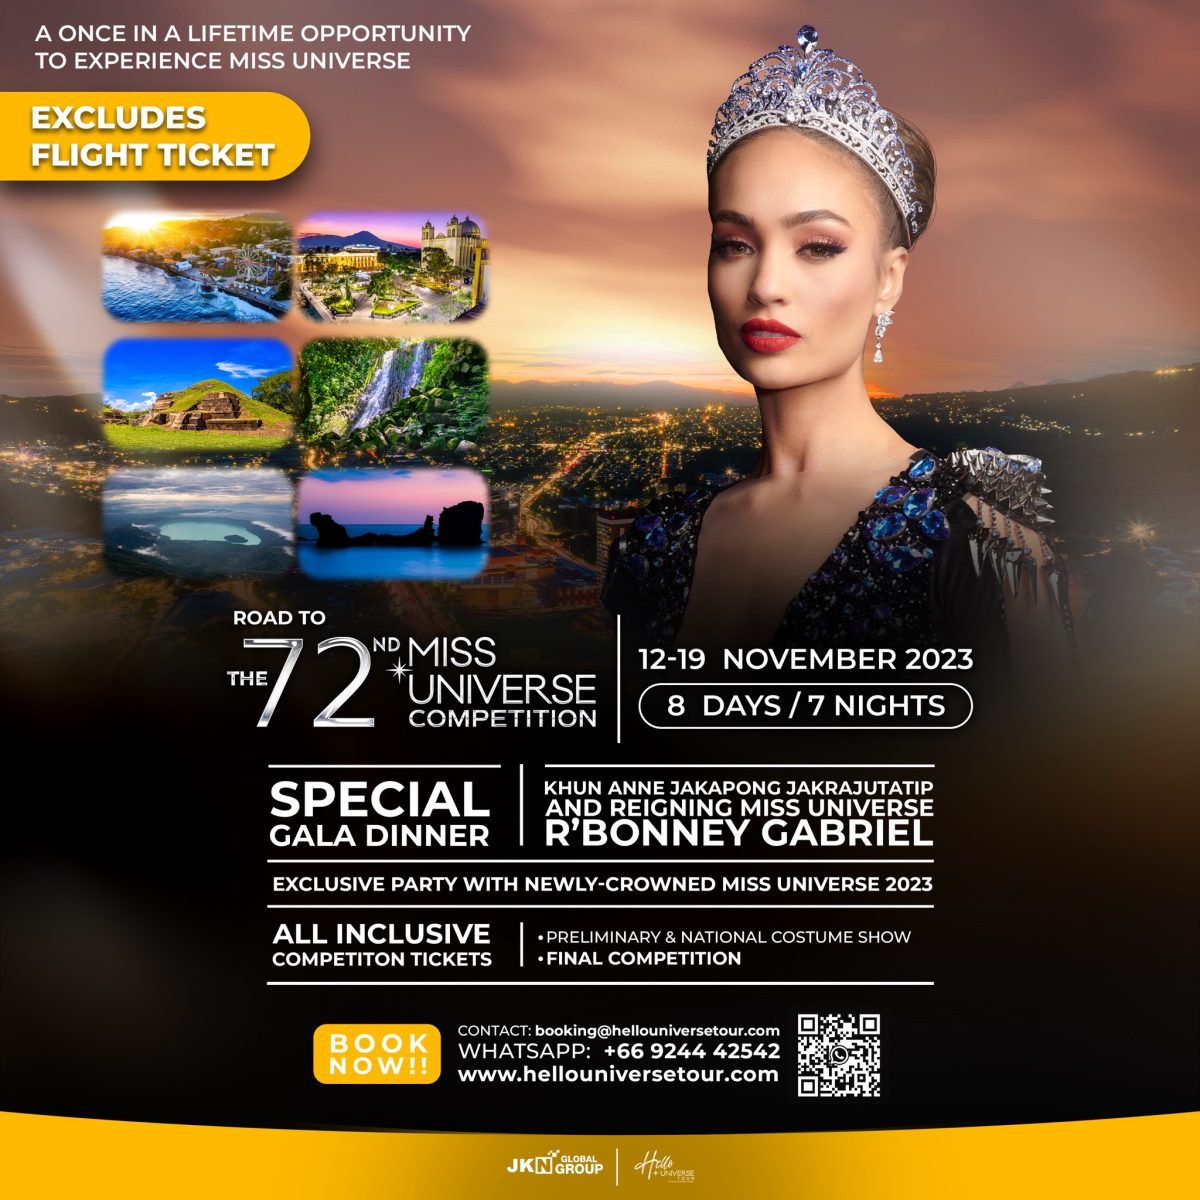 JKN ประกาศเปิดตัว Miss Universe Travel รุกธุรกิจท่องเที่ยวระดับไฮเอนด์ ดีเดย์จัดทริปแรกปลายปีนี้พานักท่องเที่ยวไทย-เทศไปประเทศเอลซัลวาดอร์